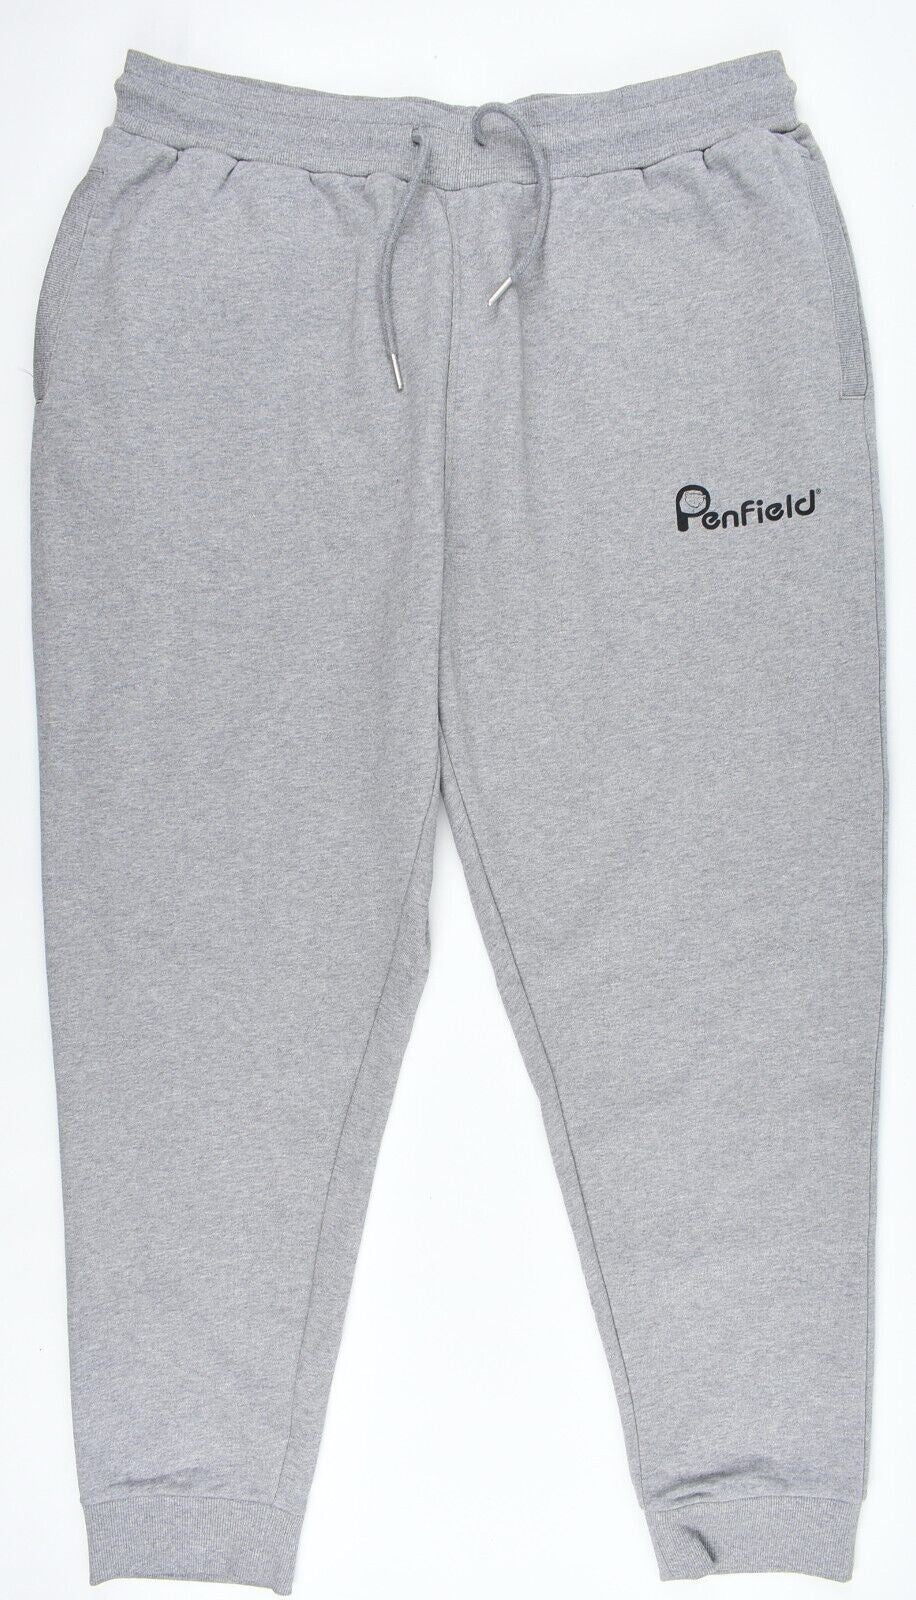 PENFIELD Men's Standard Fit Joggers, Grey Heather, size XL